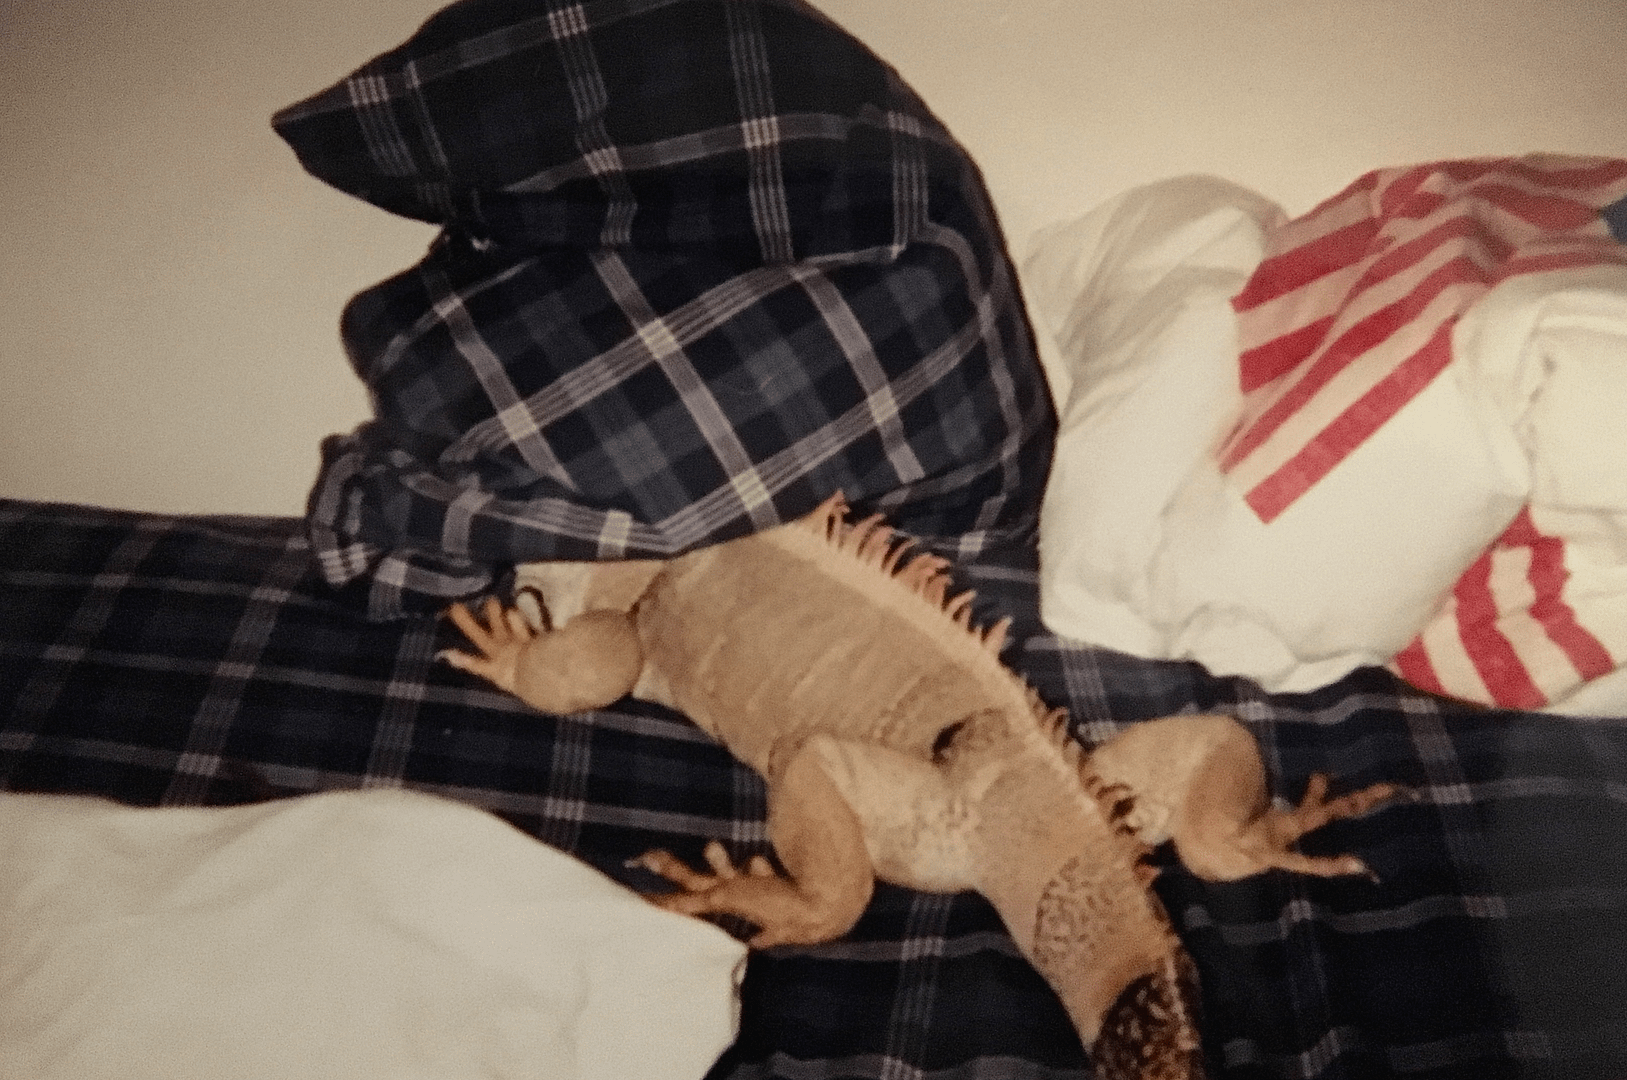 Zuzy's Pet Iguana Taking a Nap - Late 1990's